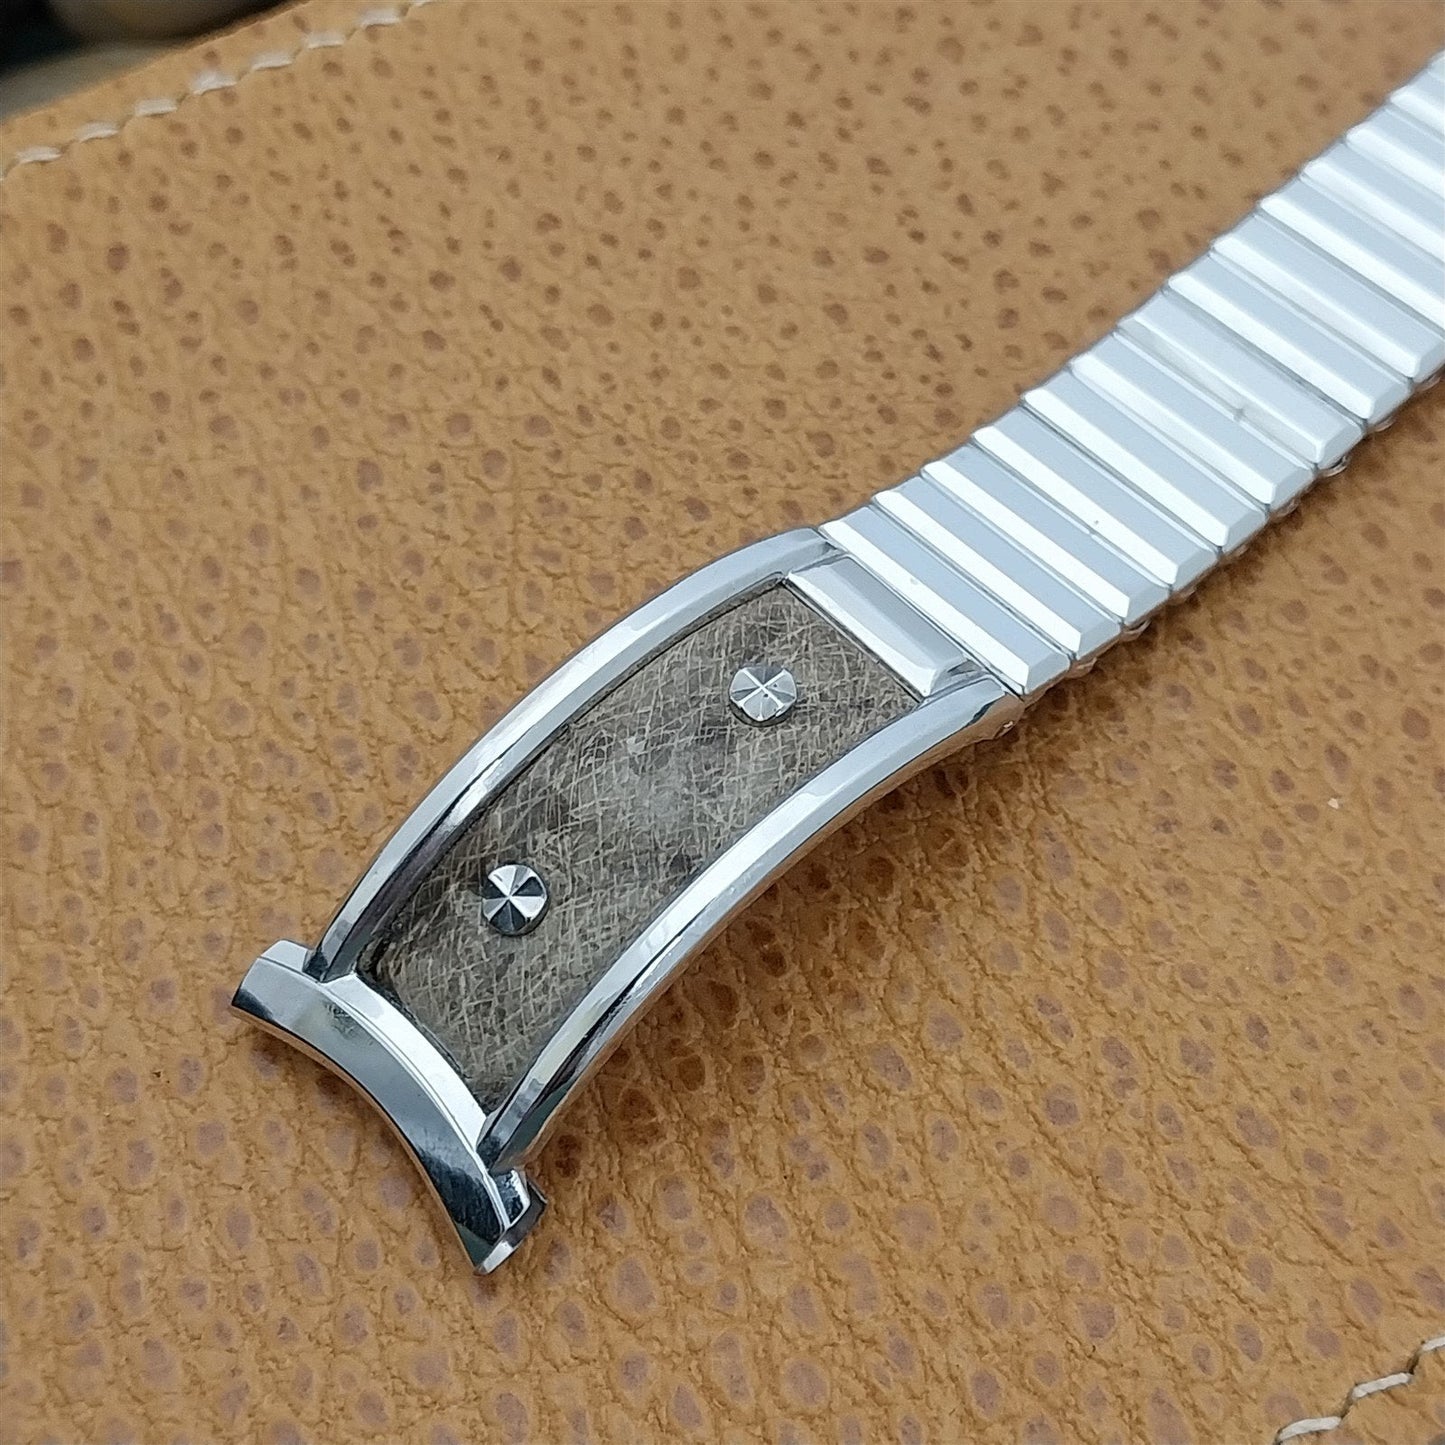 19mm 18mm 16mm Kreisler White Gold-Filled & Leather nos 1960s Vintage Watch Band